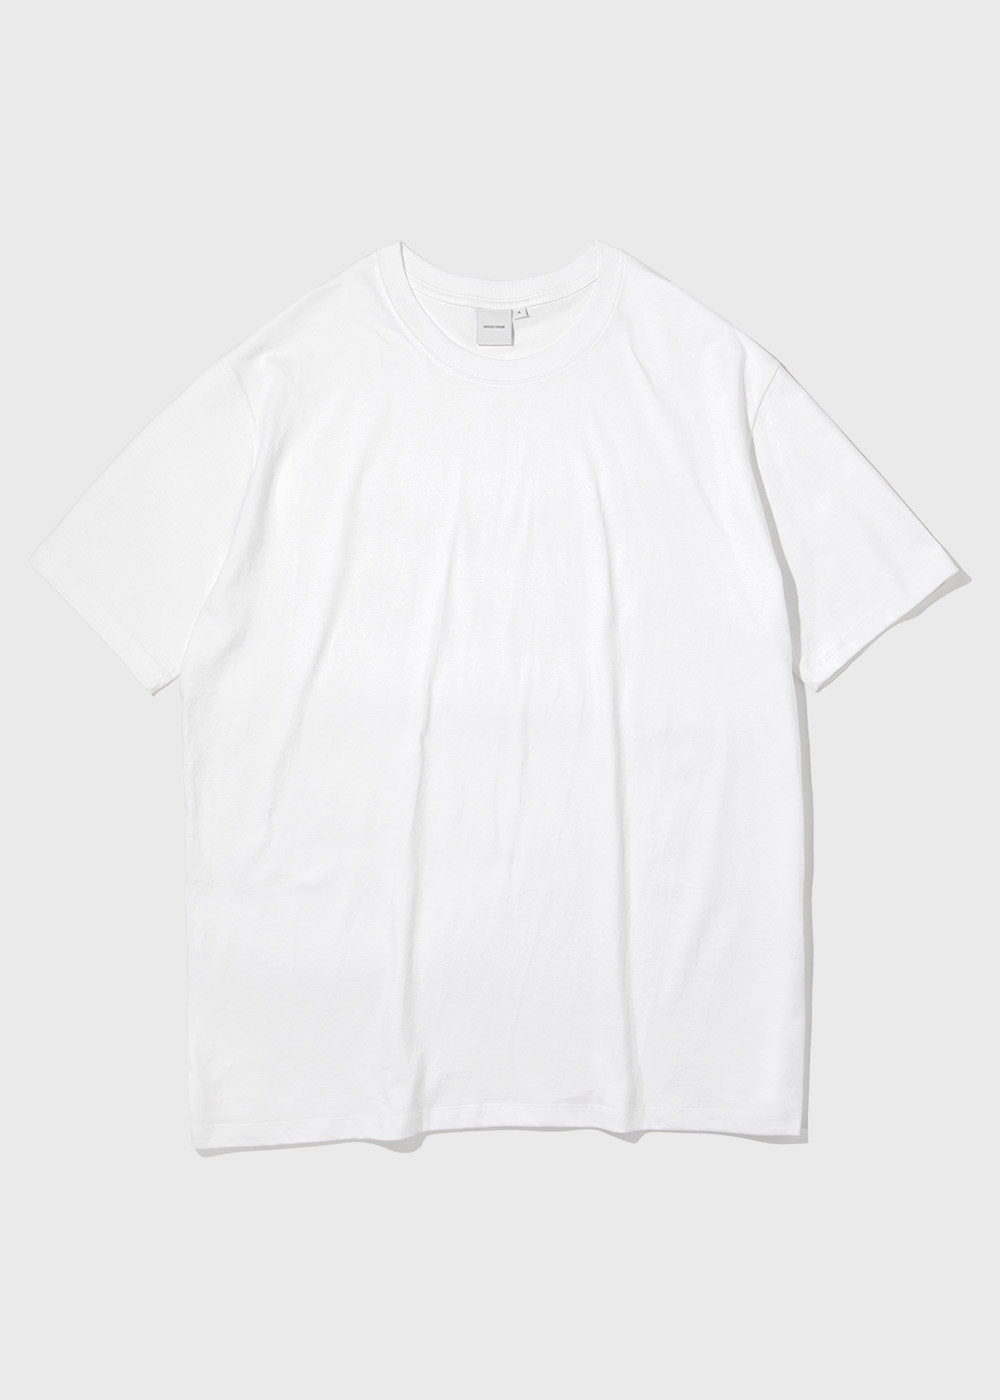 C. Tumbled Combed Cotton 100% 20/1 Single T-shirt _ white